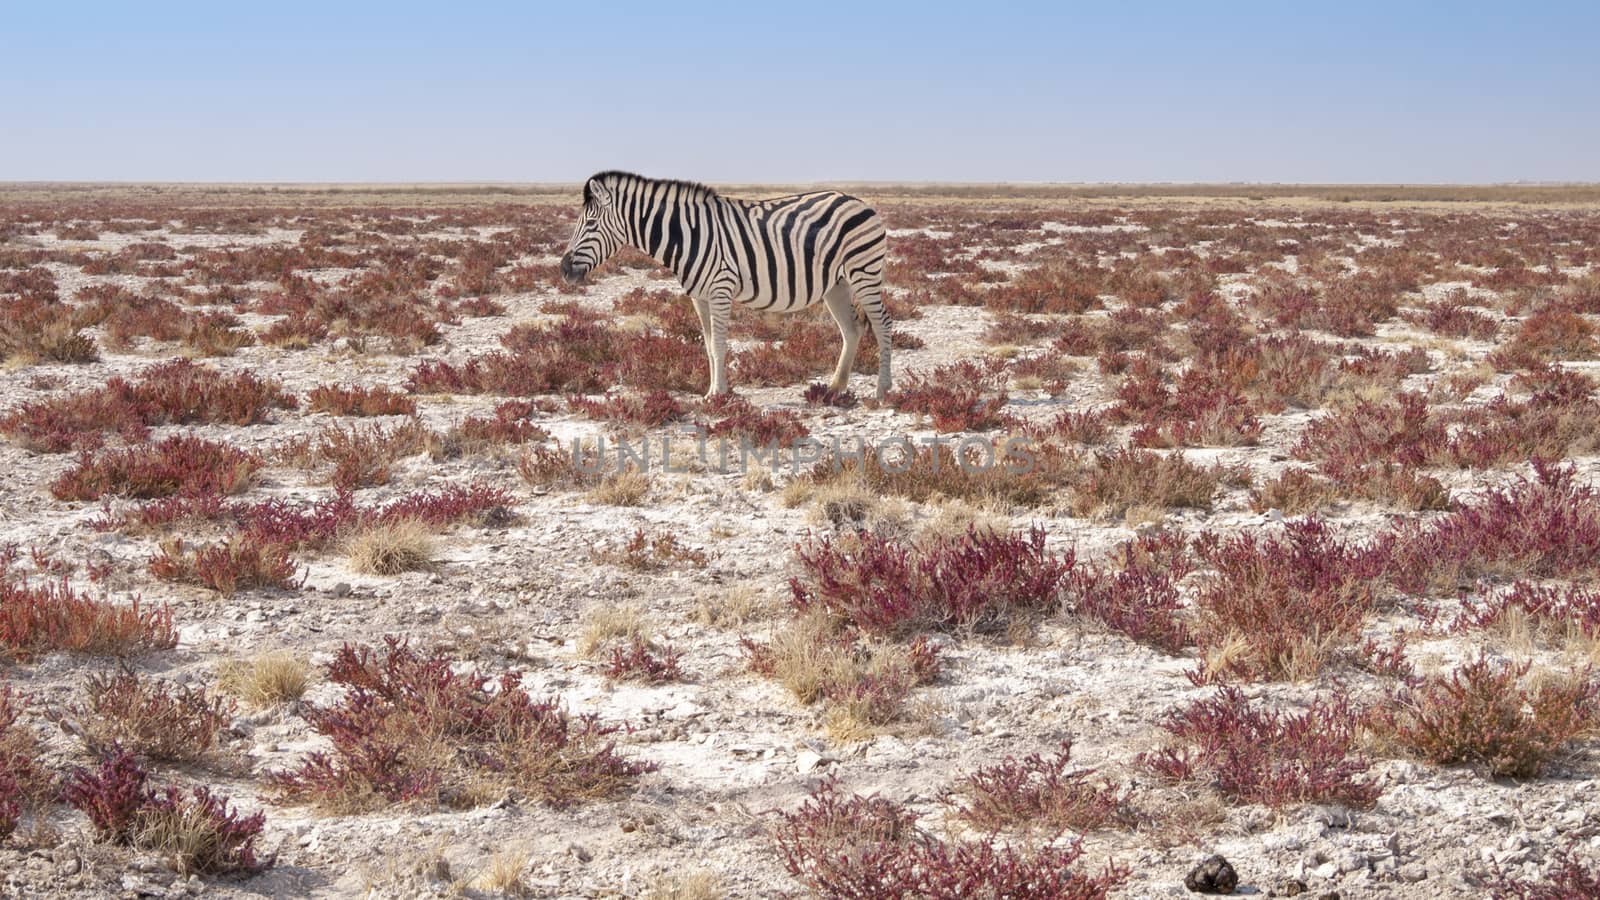 Zebra in the Etosha National Park in Namibia. by maramade